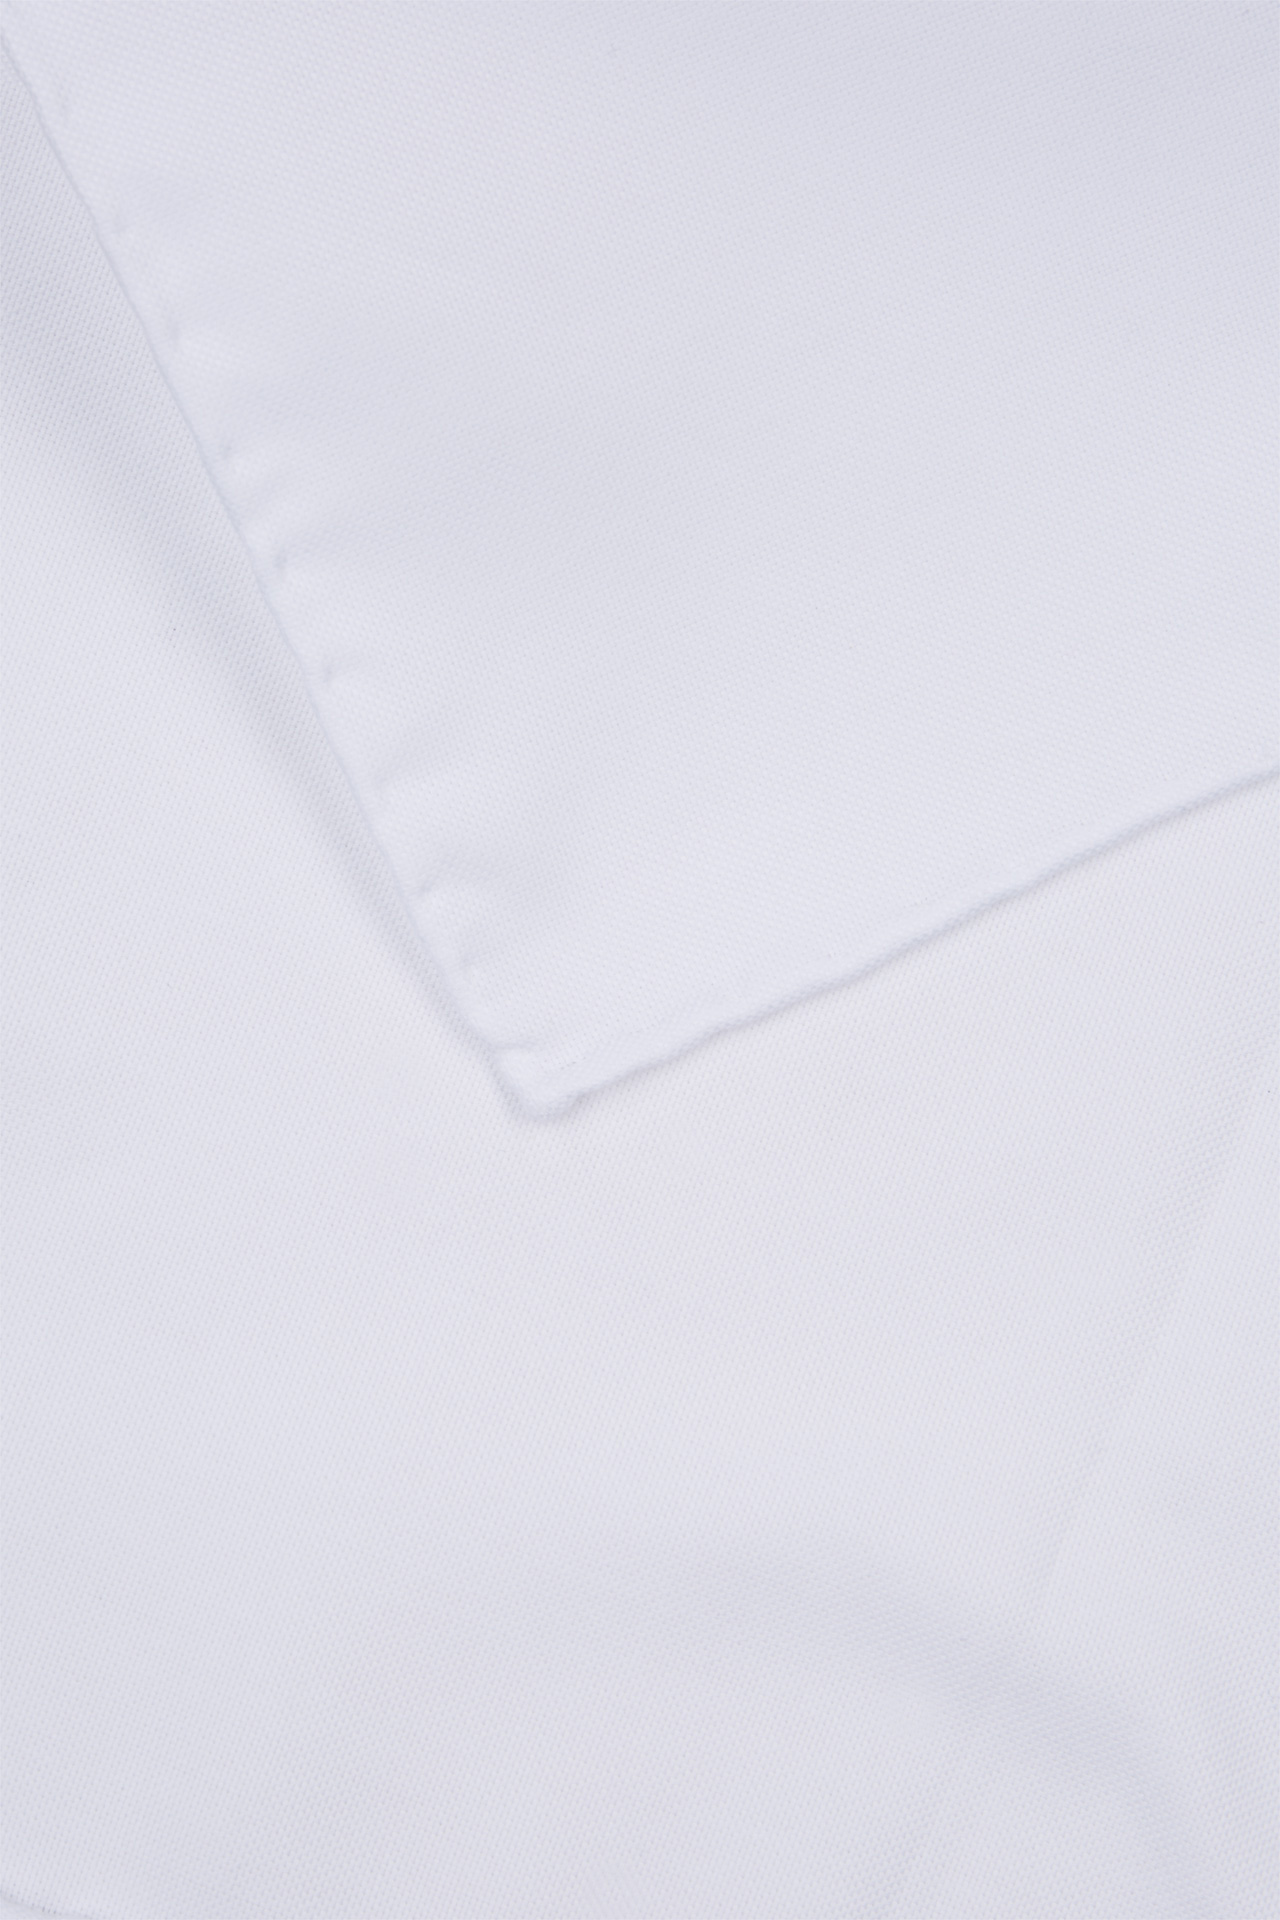 Breast pocket handkerchief in white 